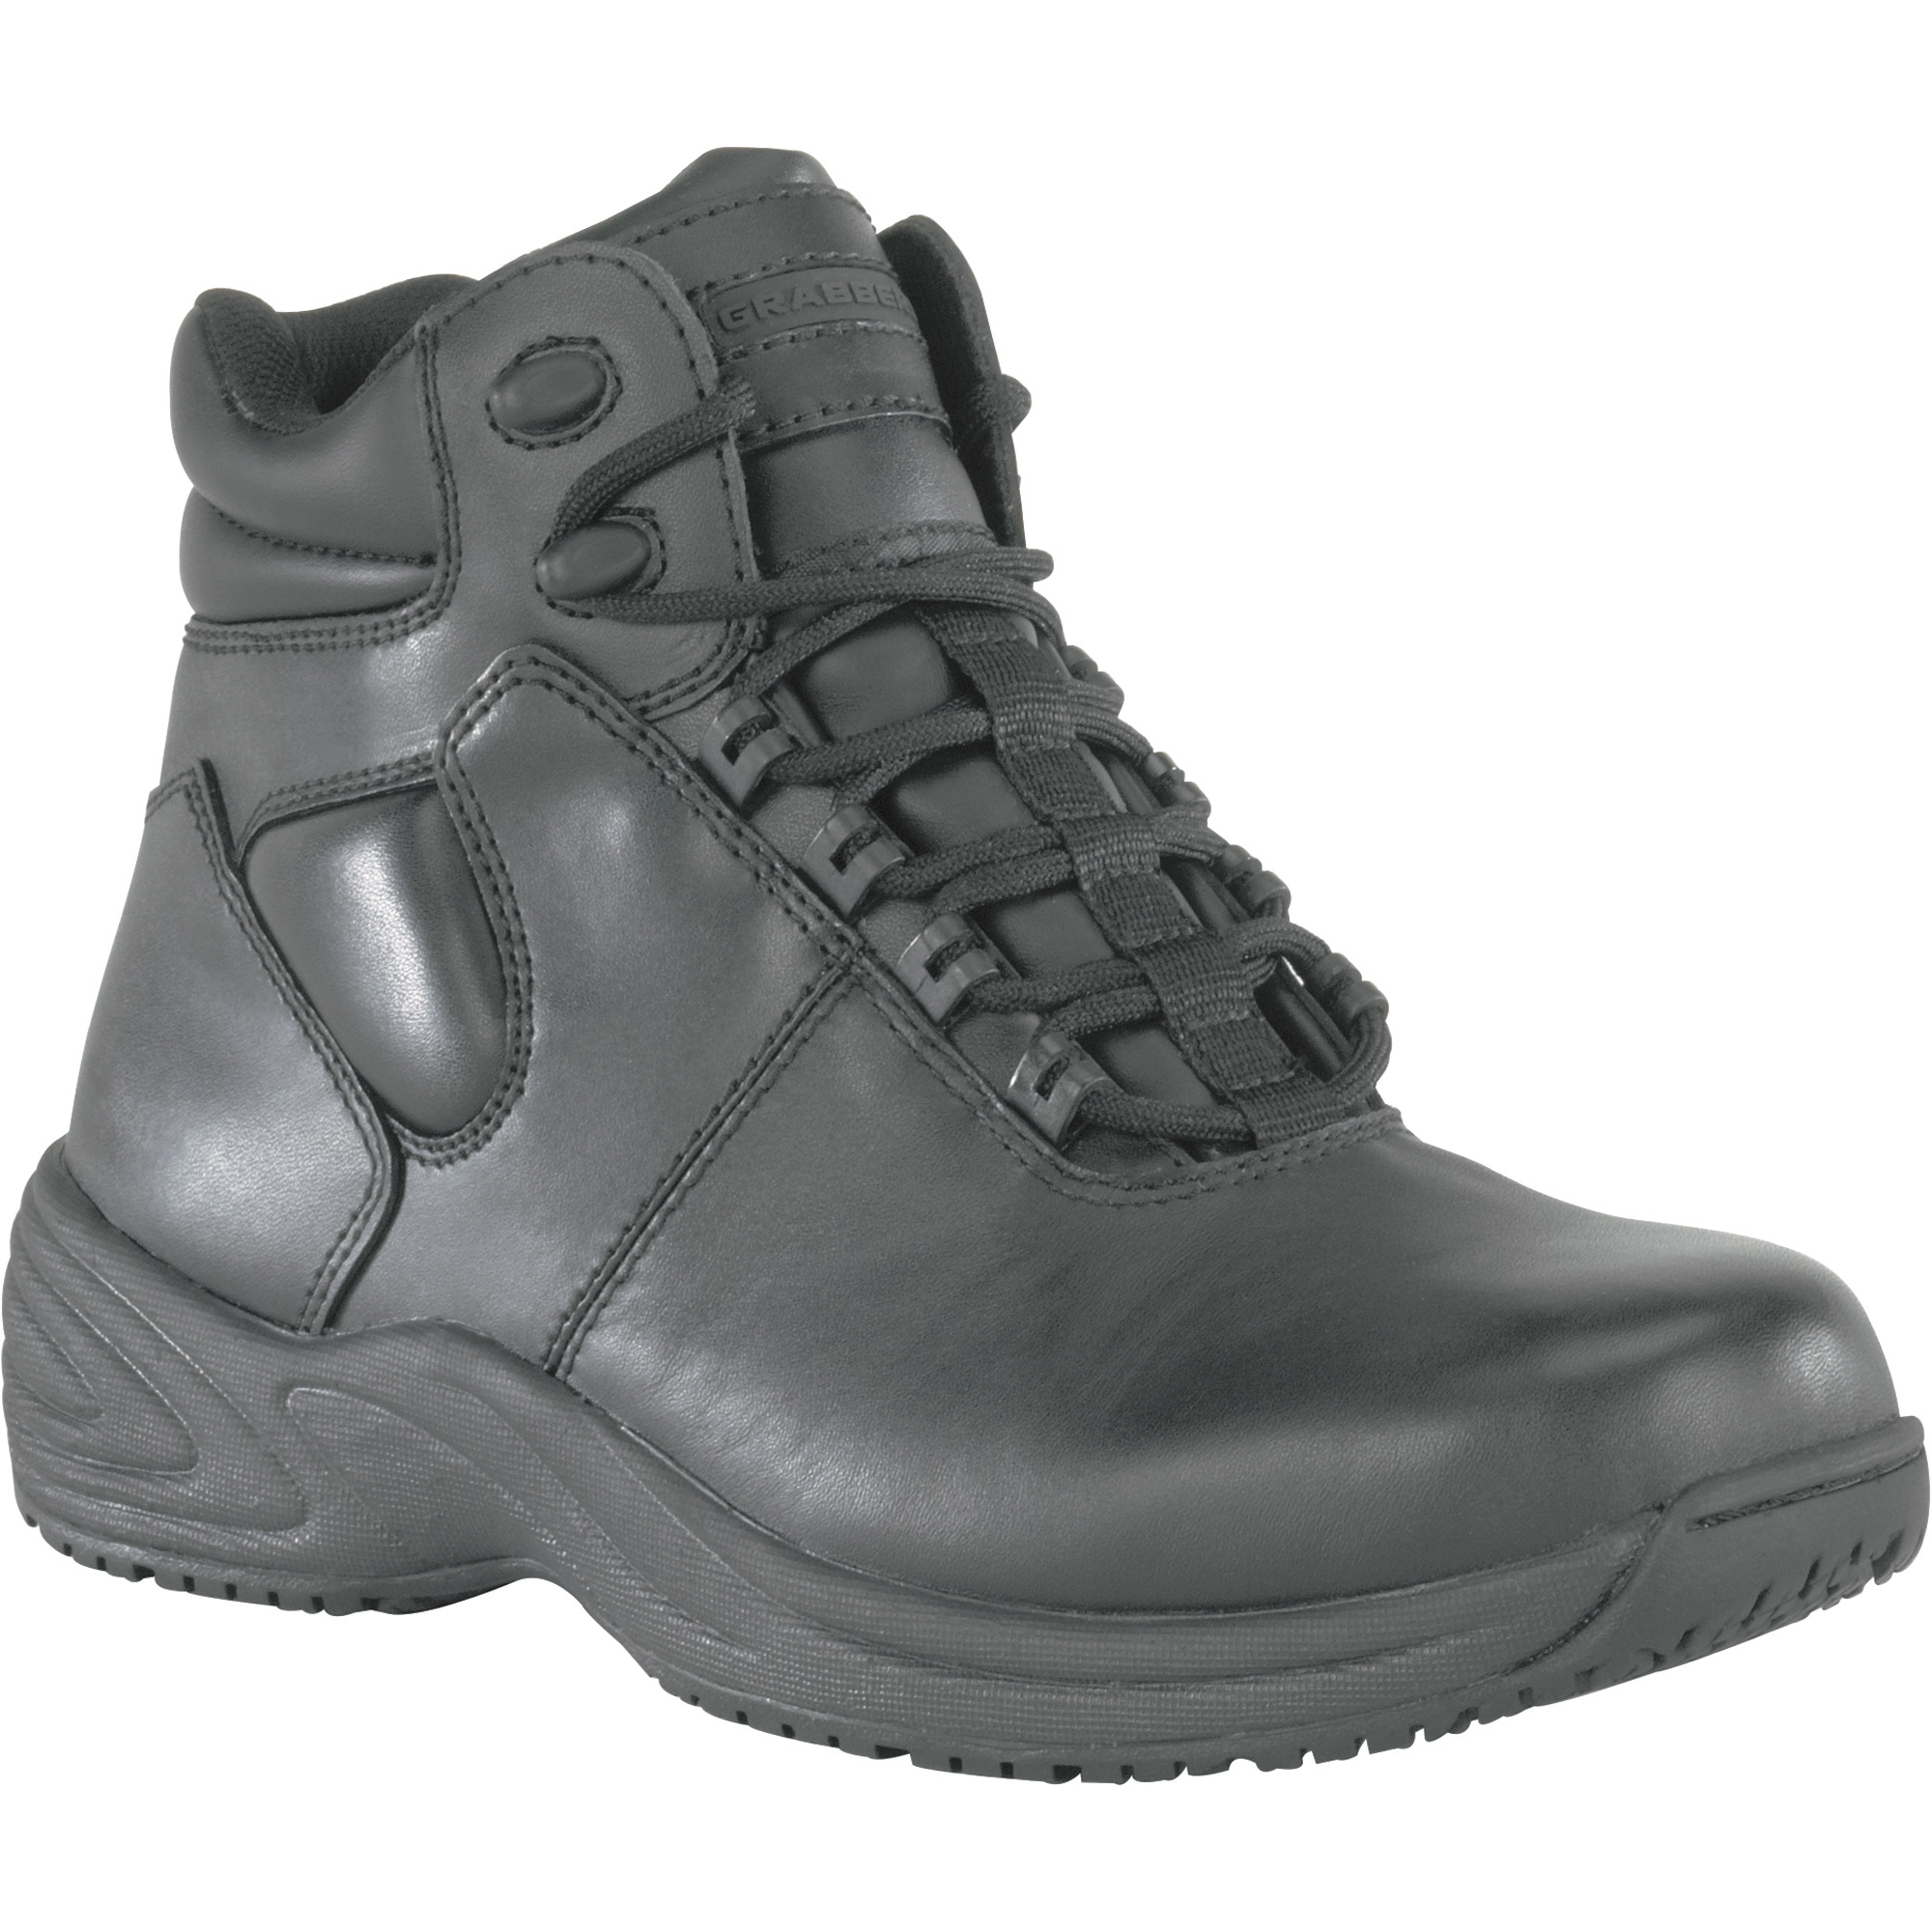 Grabbers Men's 6Inch Fastener Work Boots - Black, Size 9 1/2 Wide, Model G1240